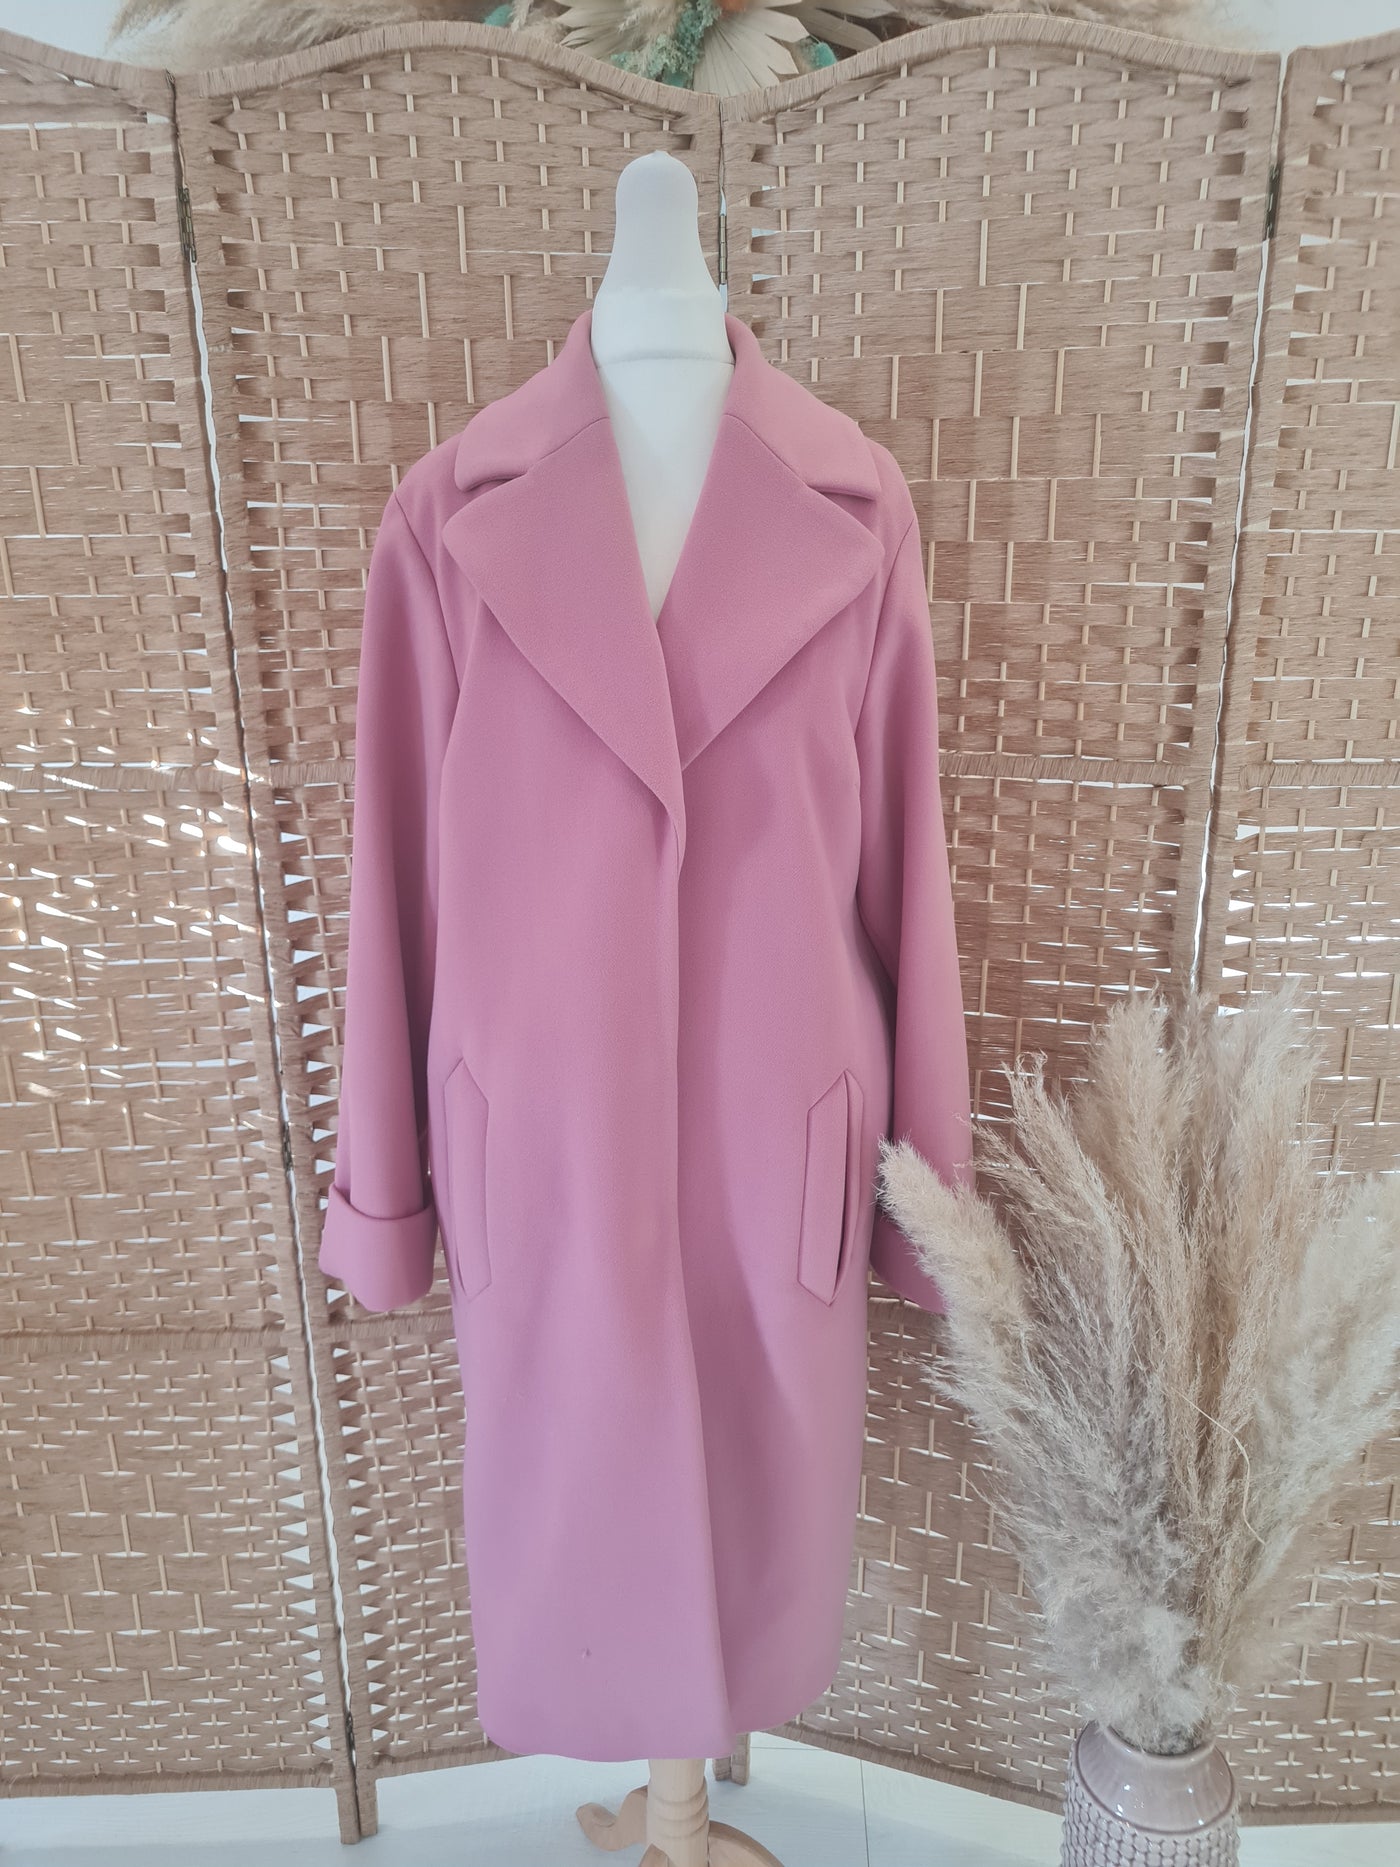 M&S pink coat 8